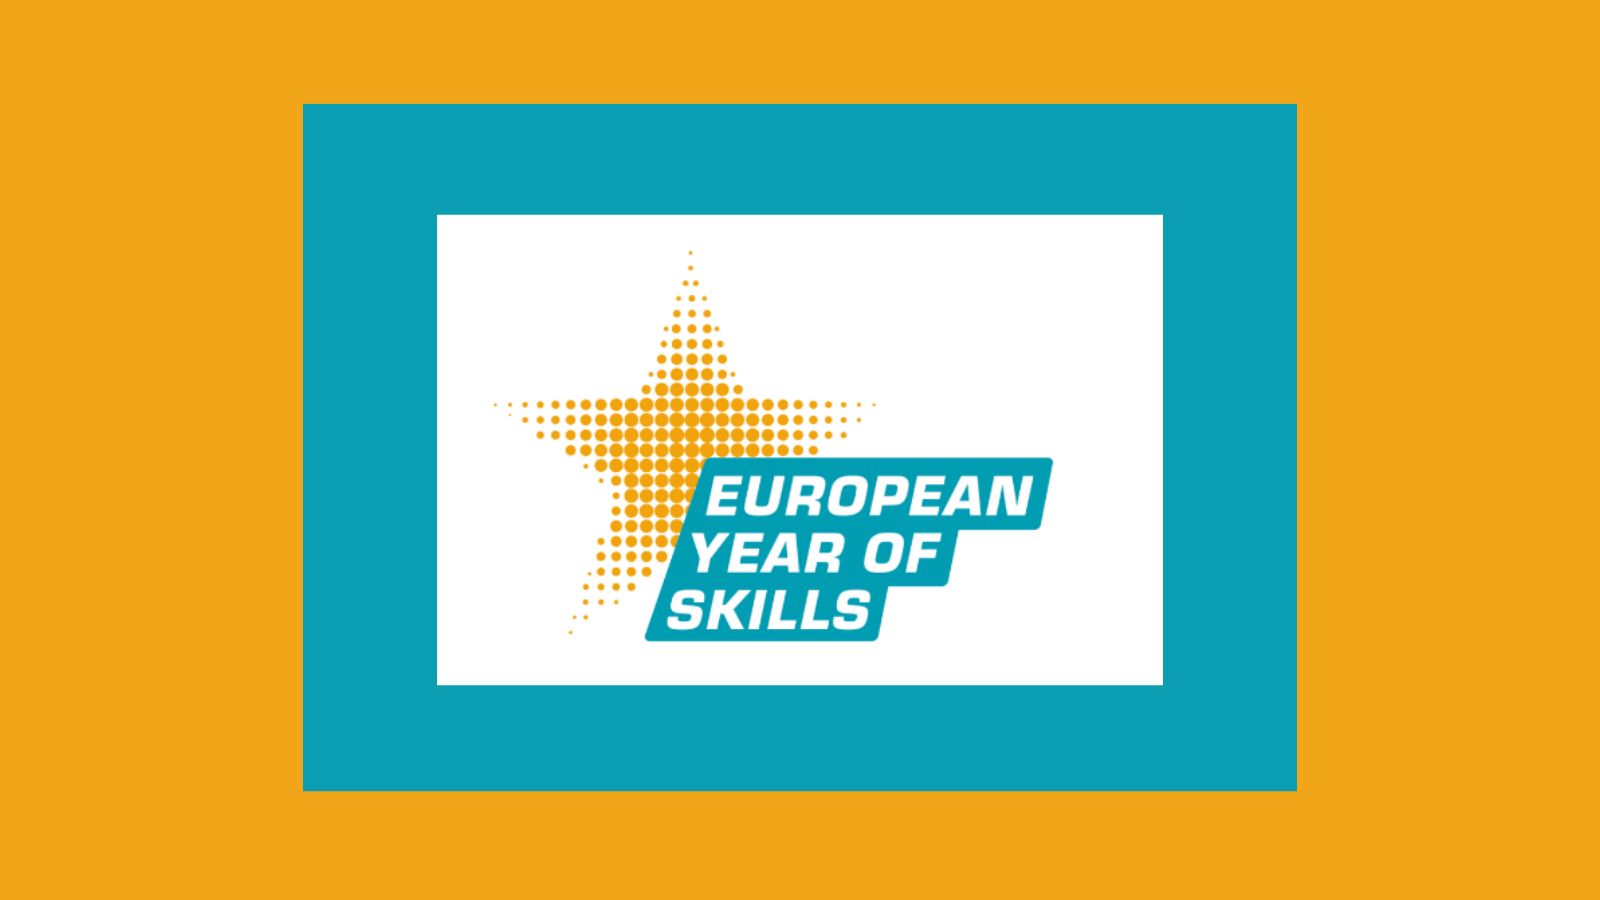 European Year of Skills kick-started by EC